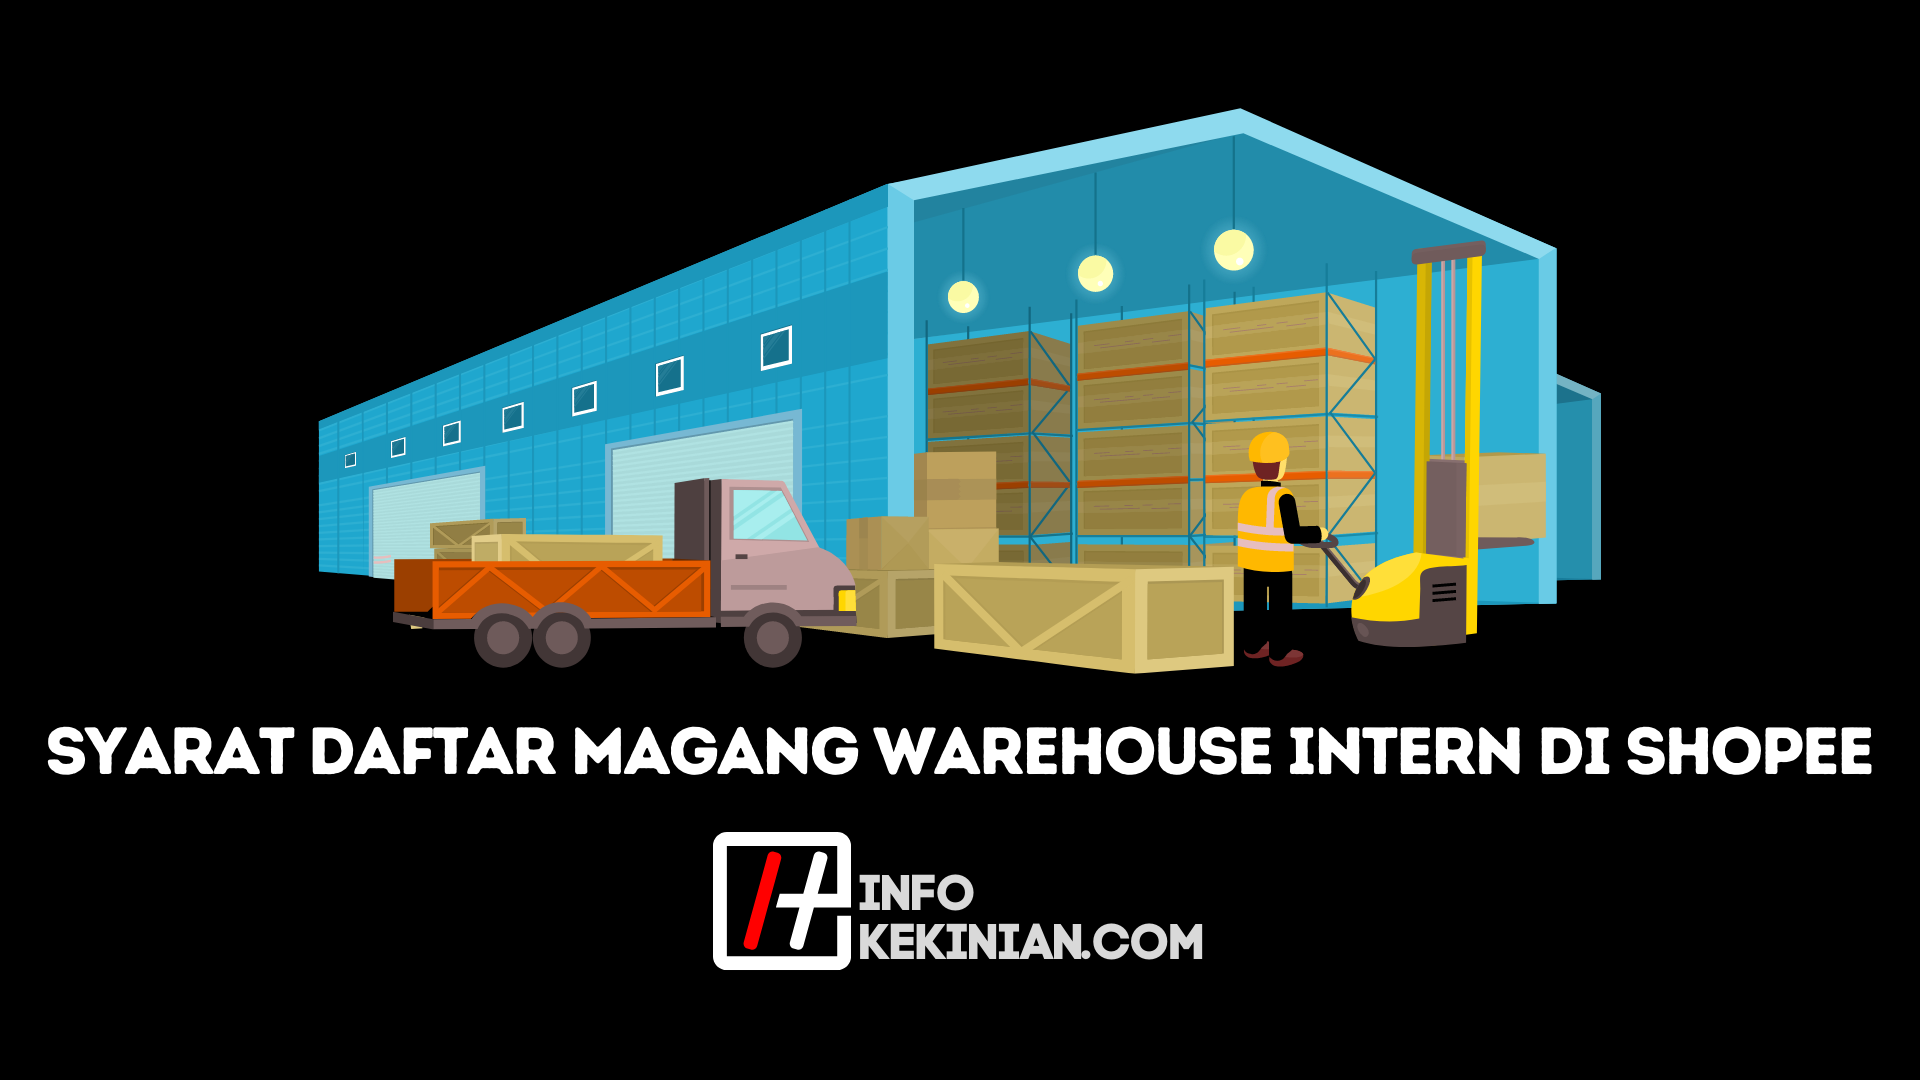 What is Warehouse Intern Shopee